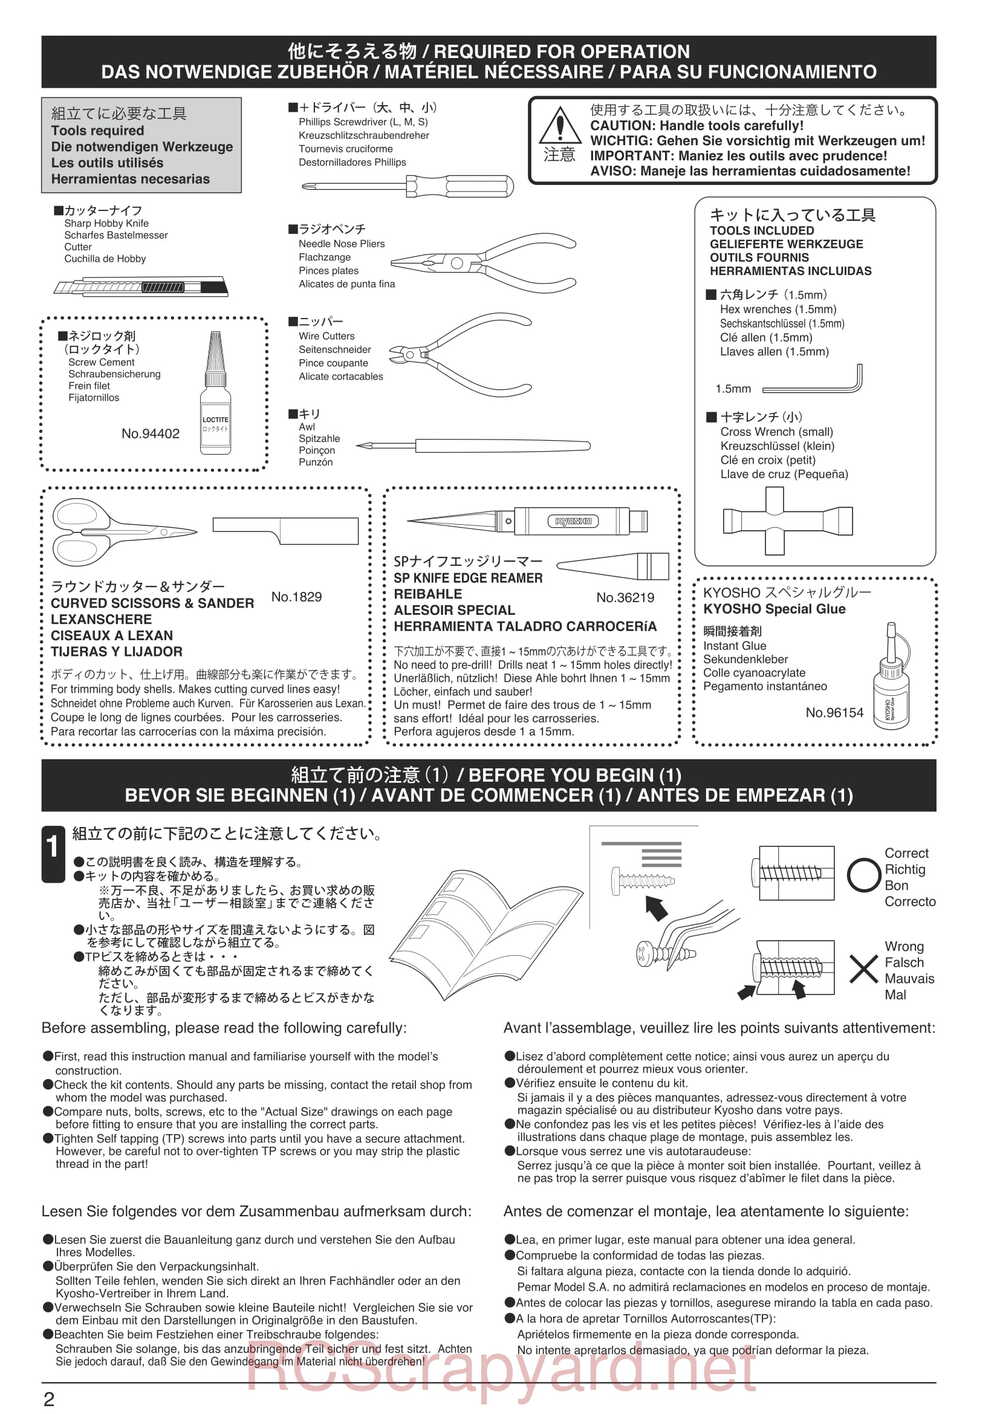 Kyosho - 30912 - EP Fazer Rally - Manual - Page 02